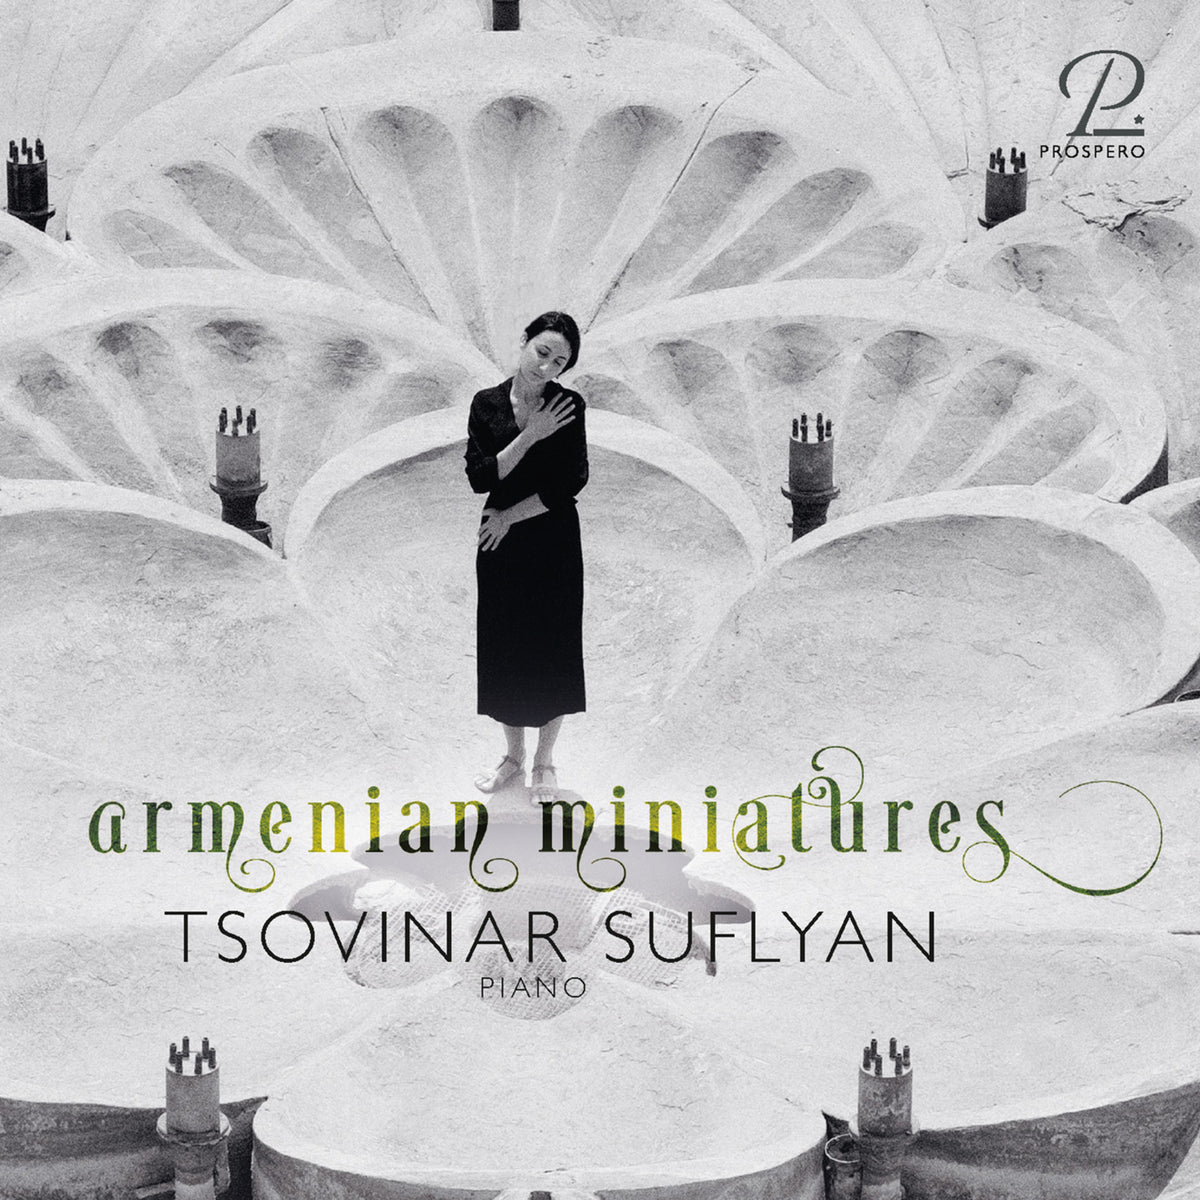 Tsovinar Suflyan - Armenian Miniatures -  Works for Solo Piano - PROSP0096)